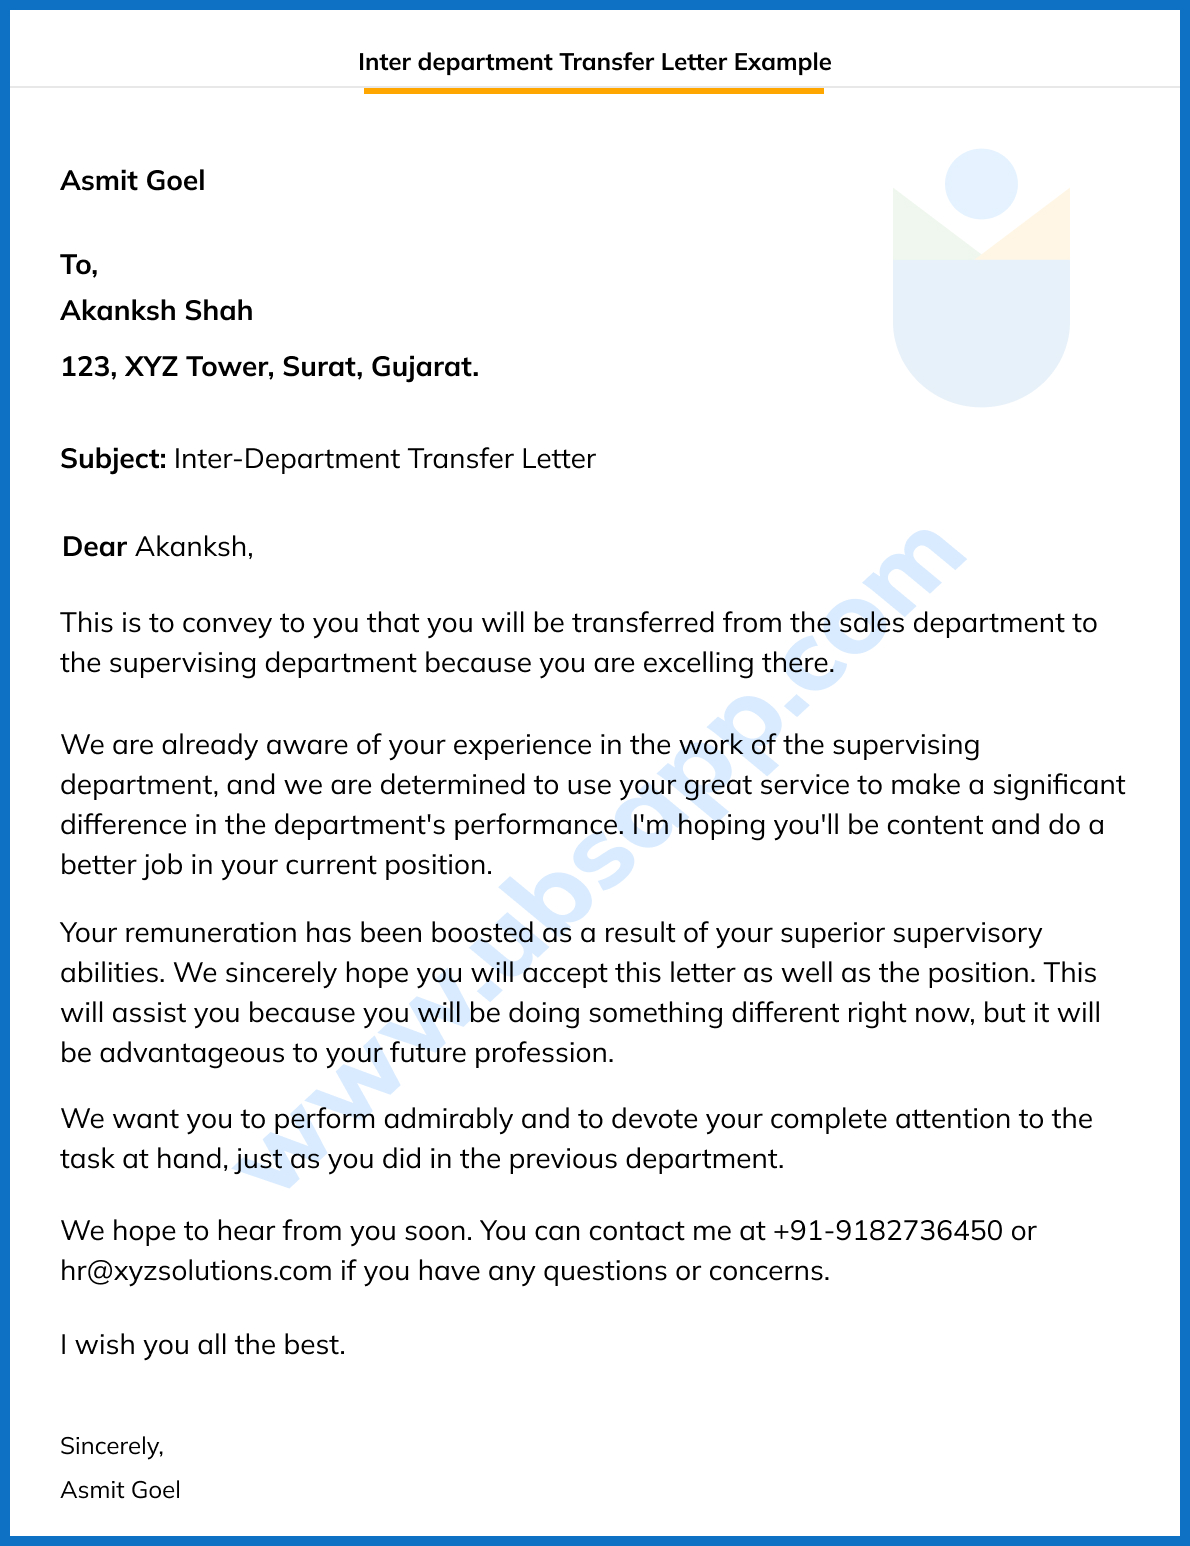 Inter department Transfer Letter Example